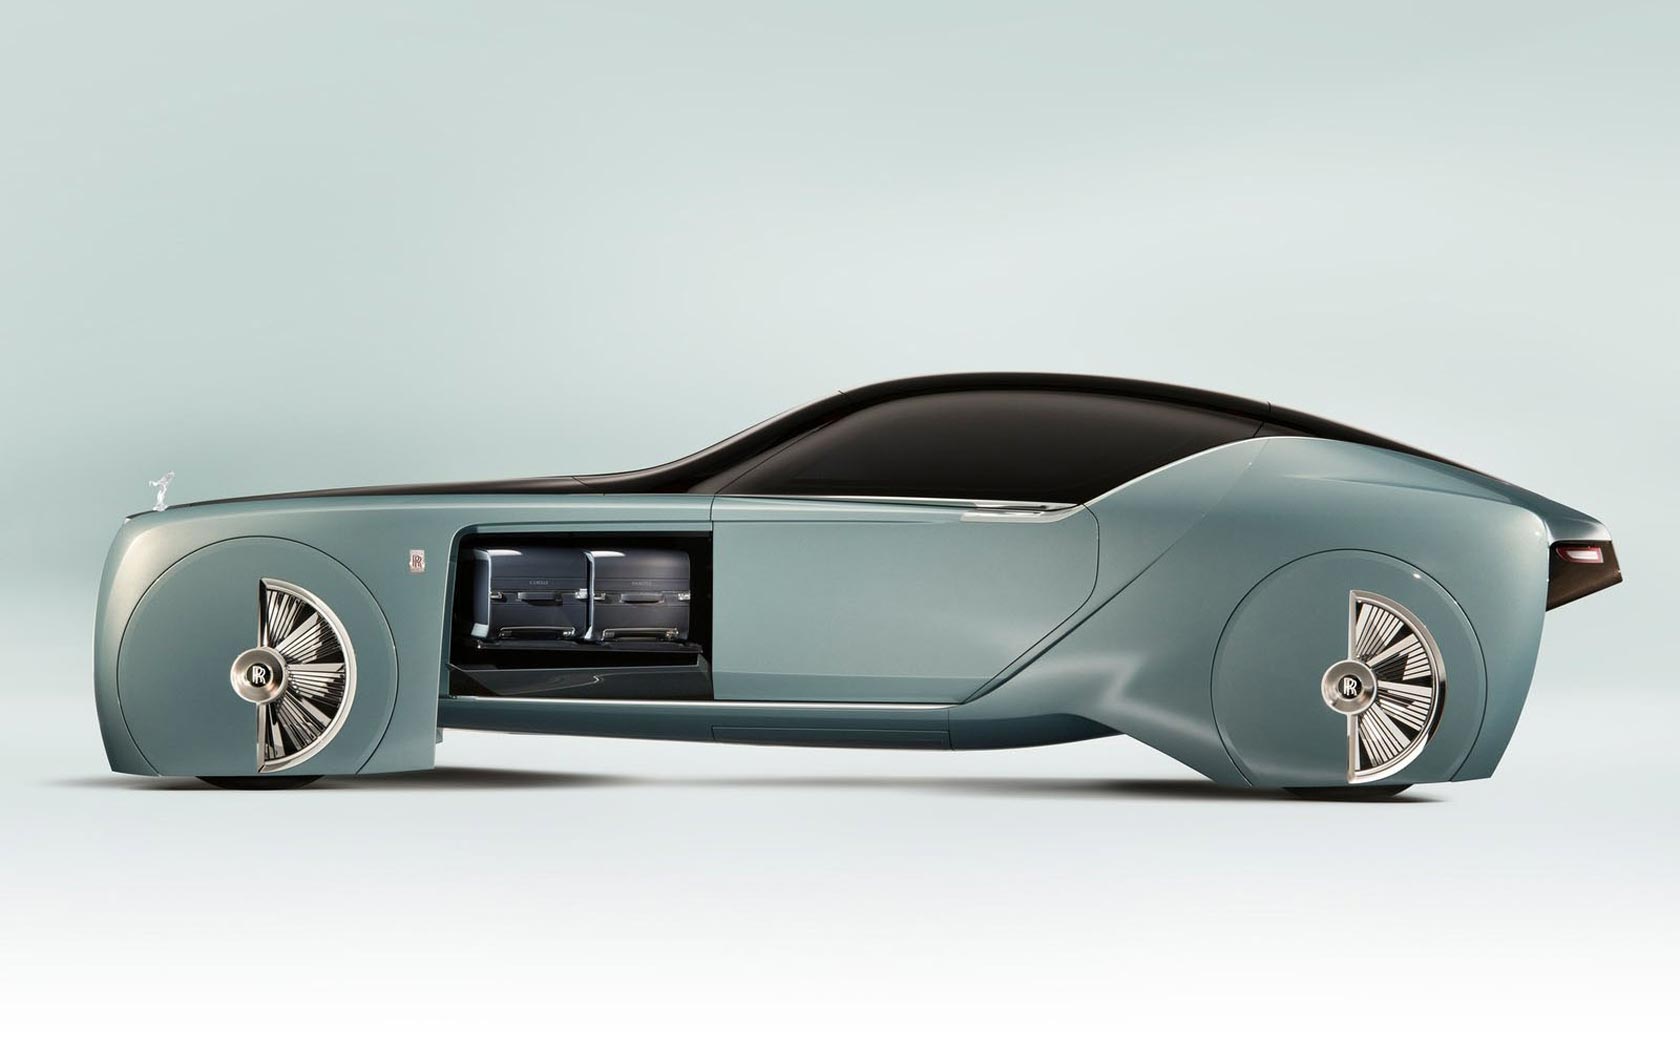  Rolls-Royce 103EX Vision Next 100 Concept 